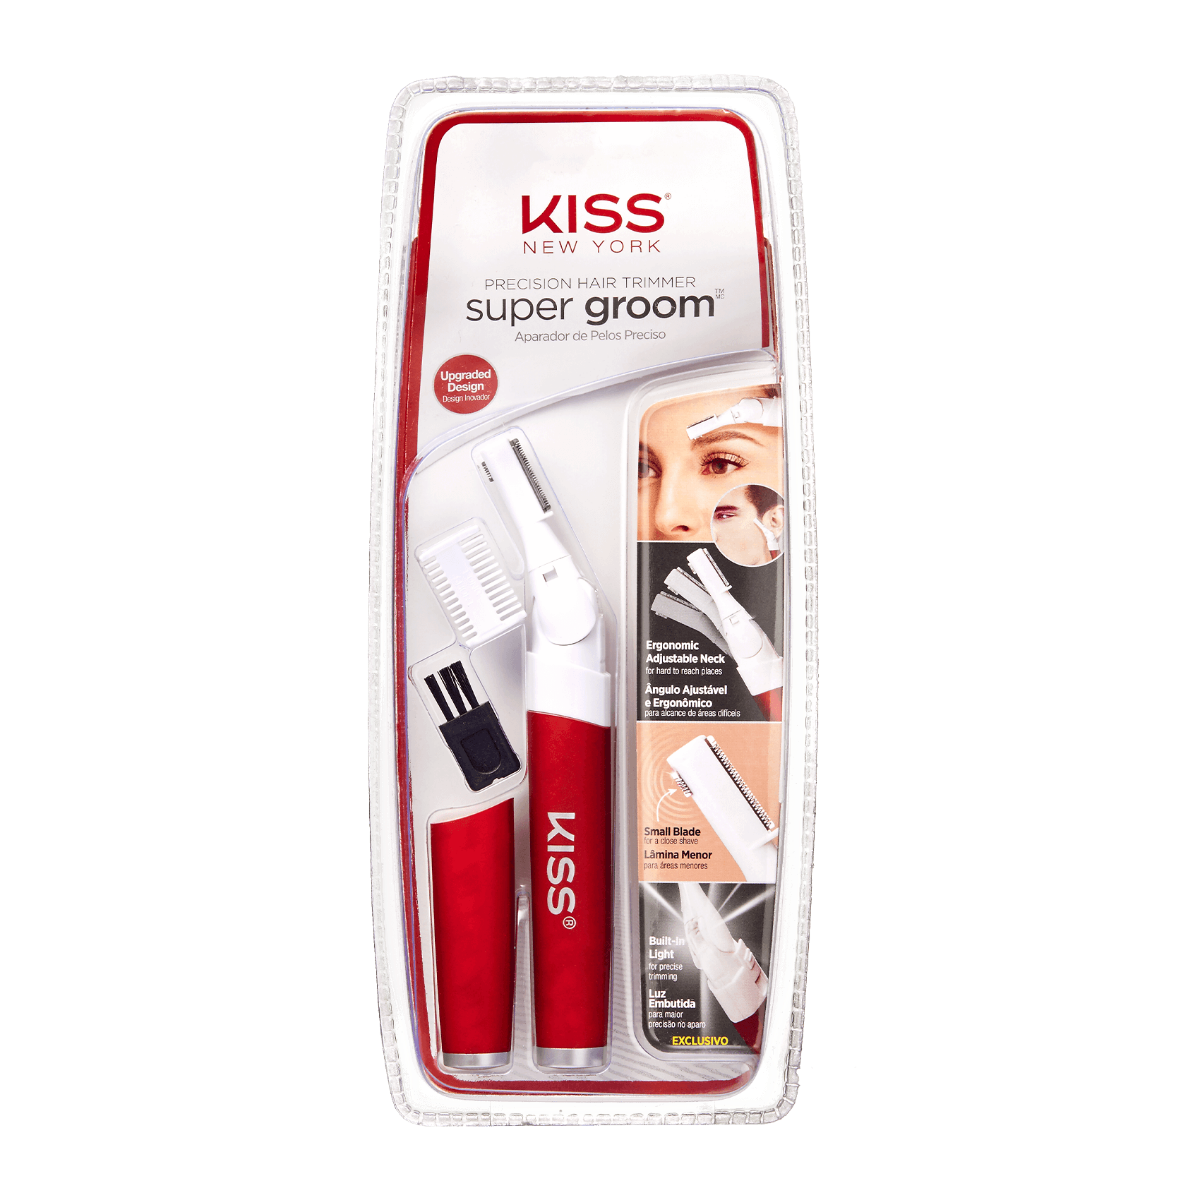 KISS Supergroom Precision Hair Trimmer